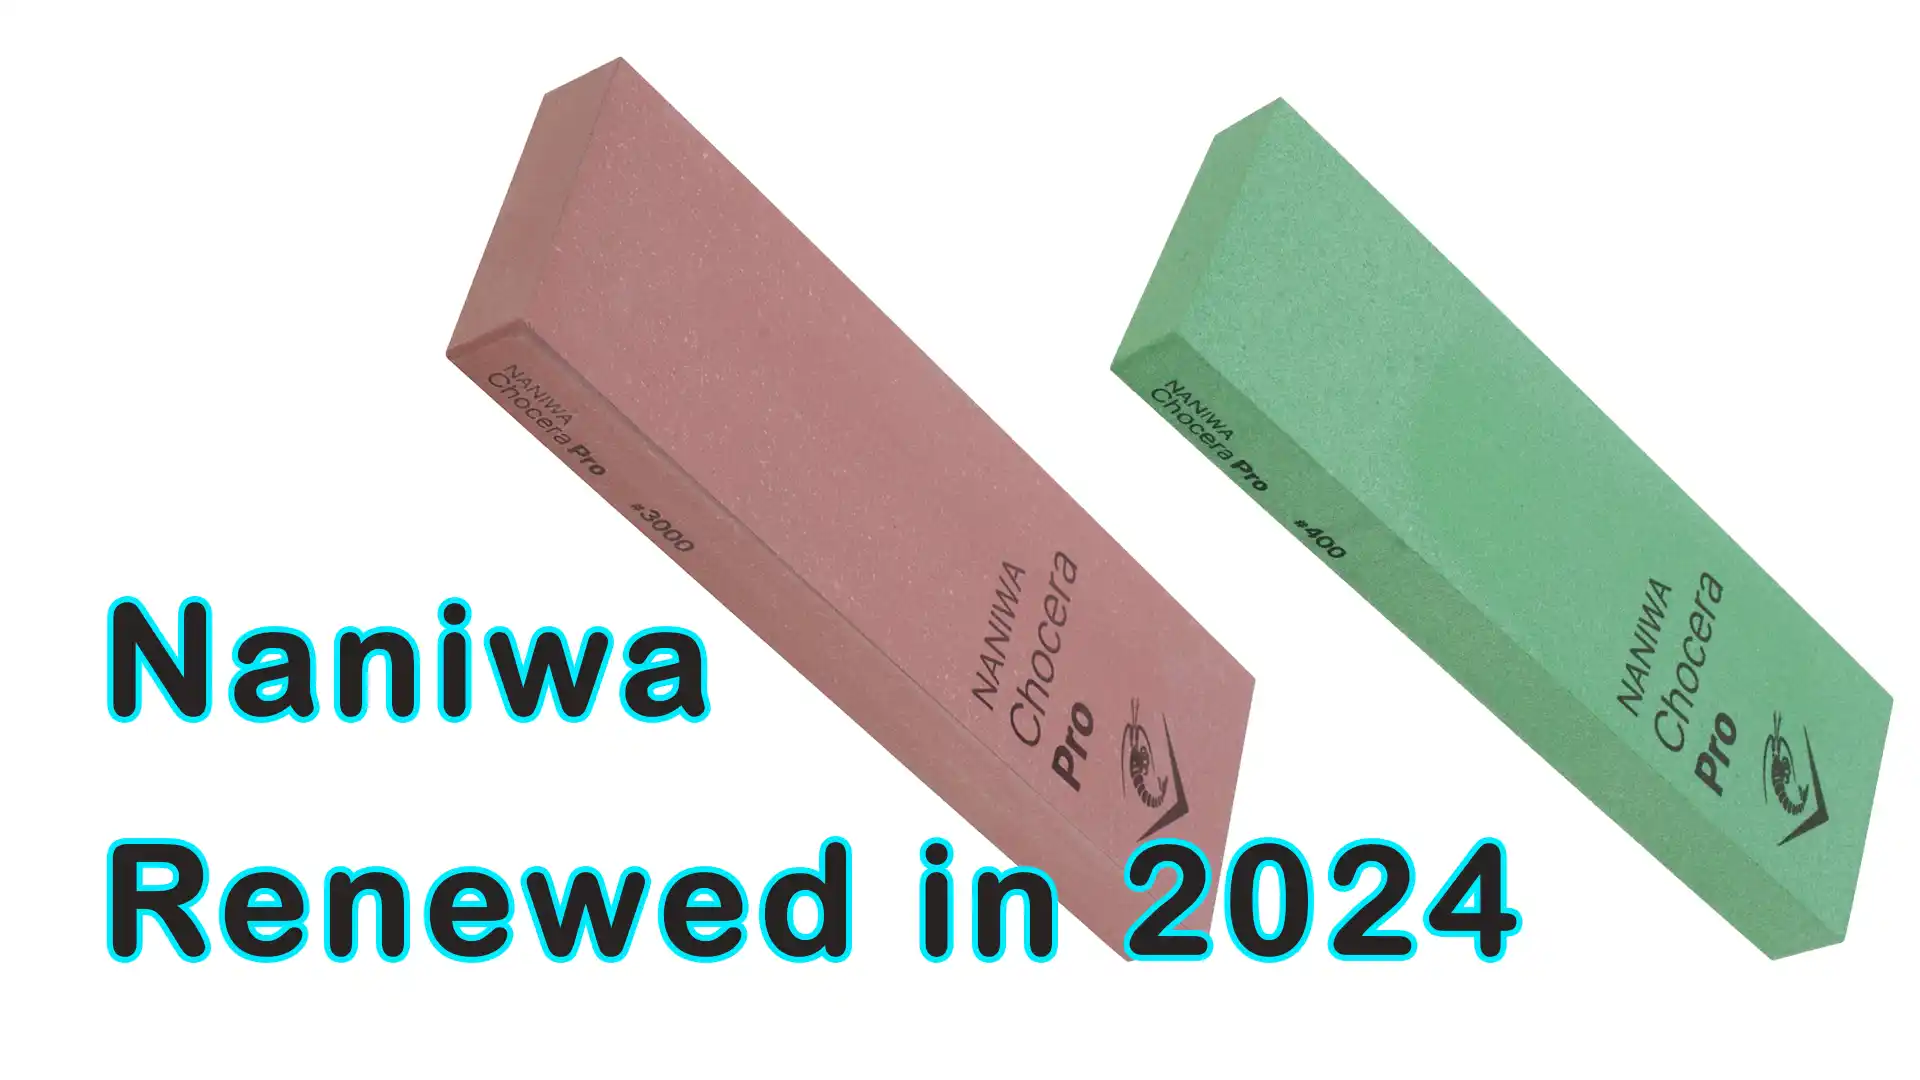 Naniwa Renewed in 2024: New box and Packaging